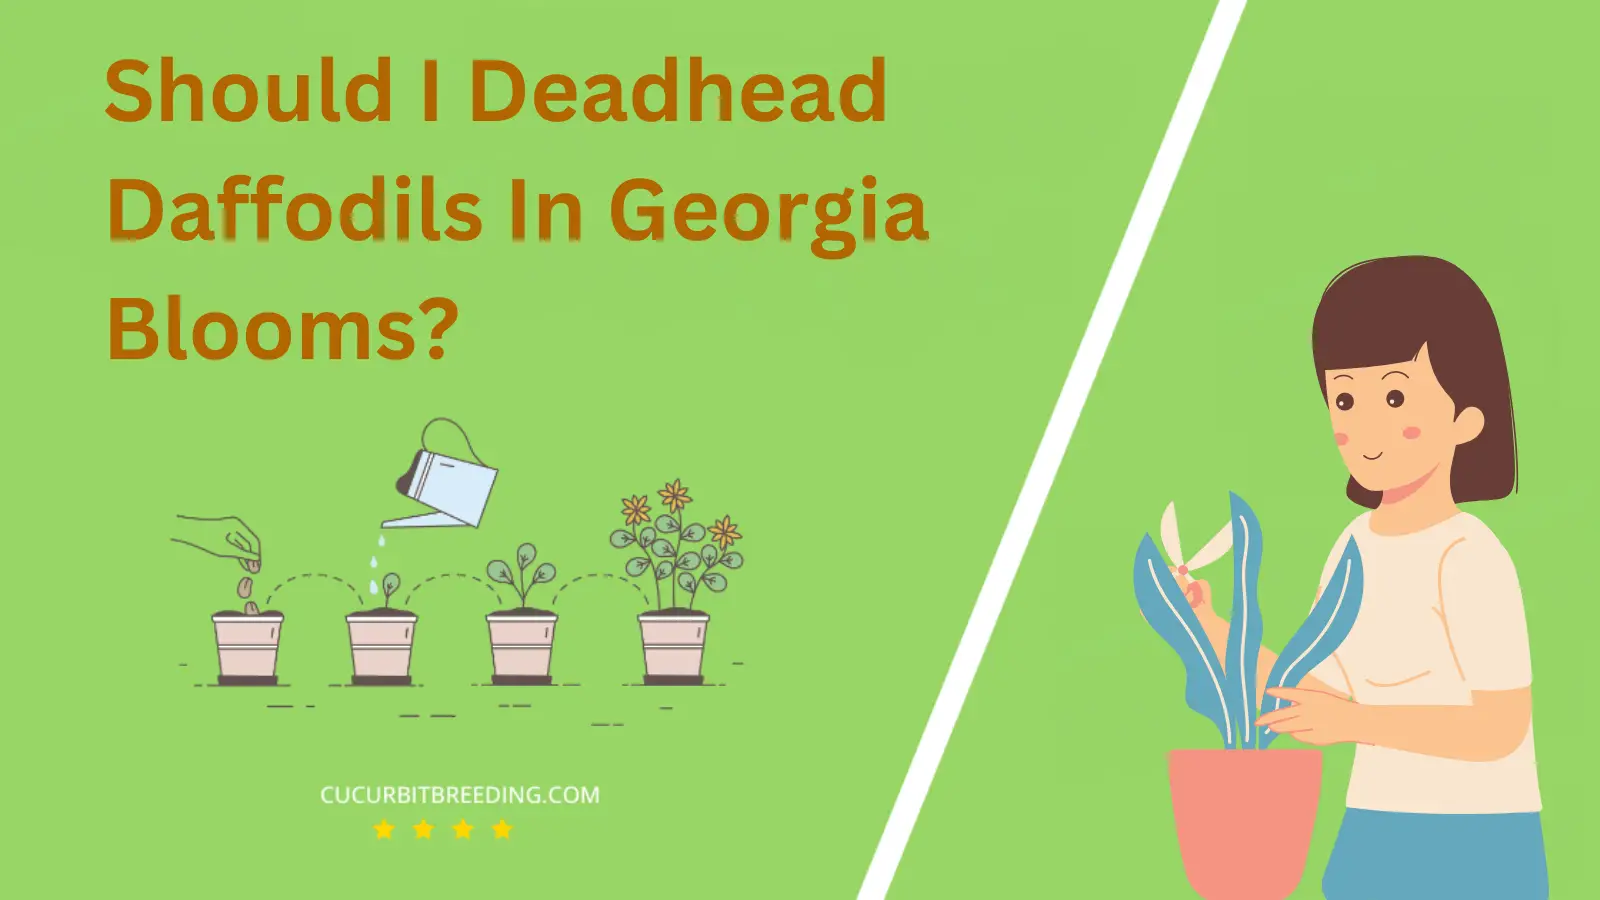 Should I Deadhead Daffodils In Georgia Blooms?